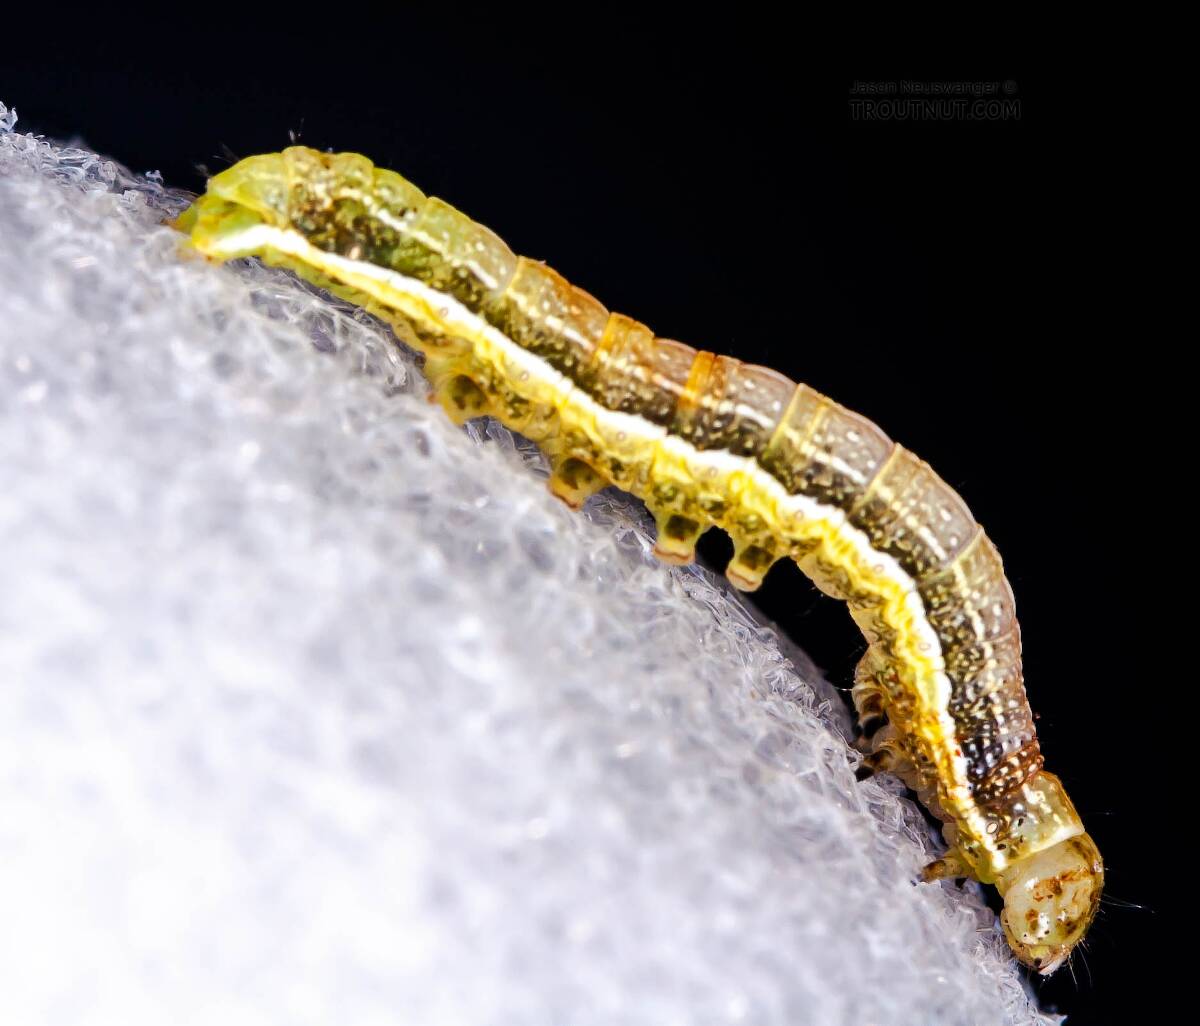 Geometridae (Inchworms) Moth Larva